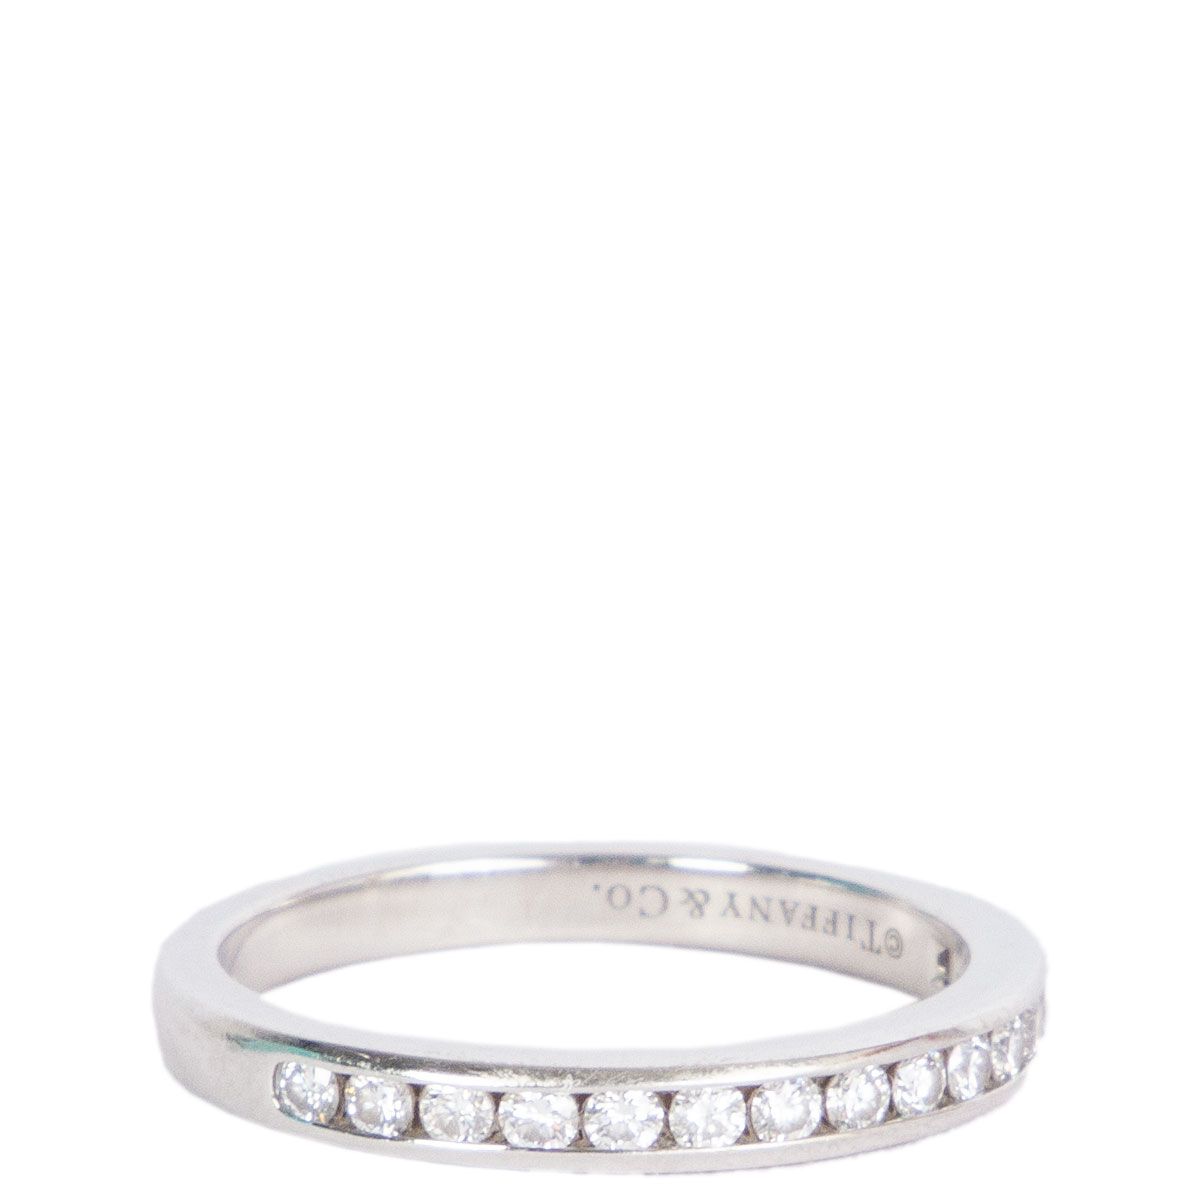 Productie blik Aanklager Tiffany & Co. Diamond Wedding Ring